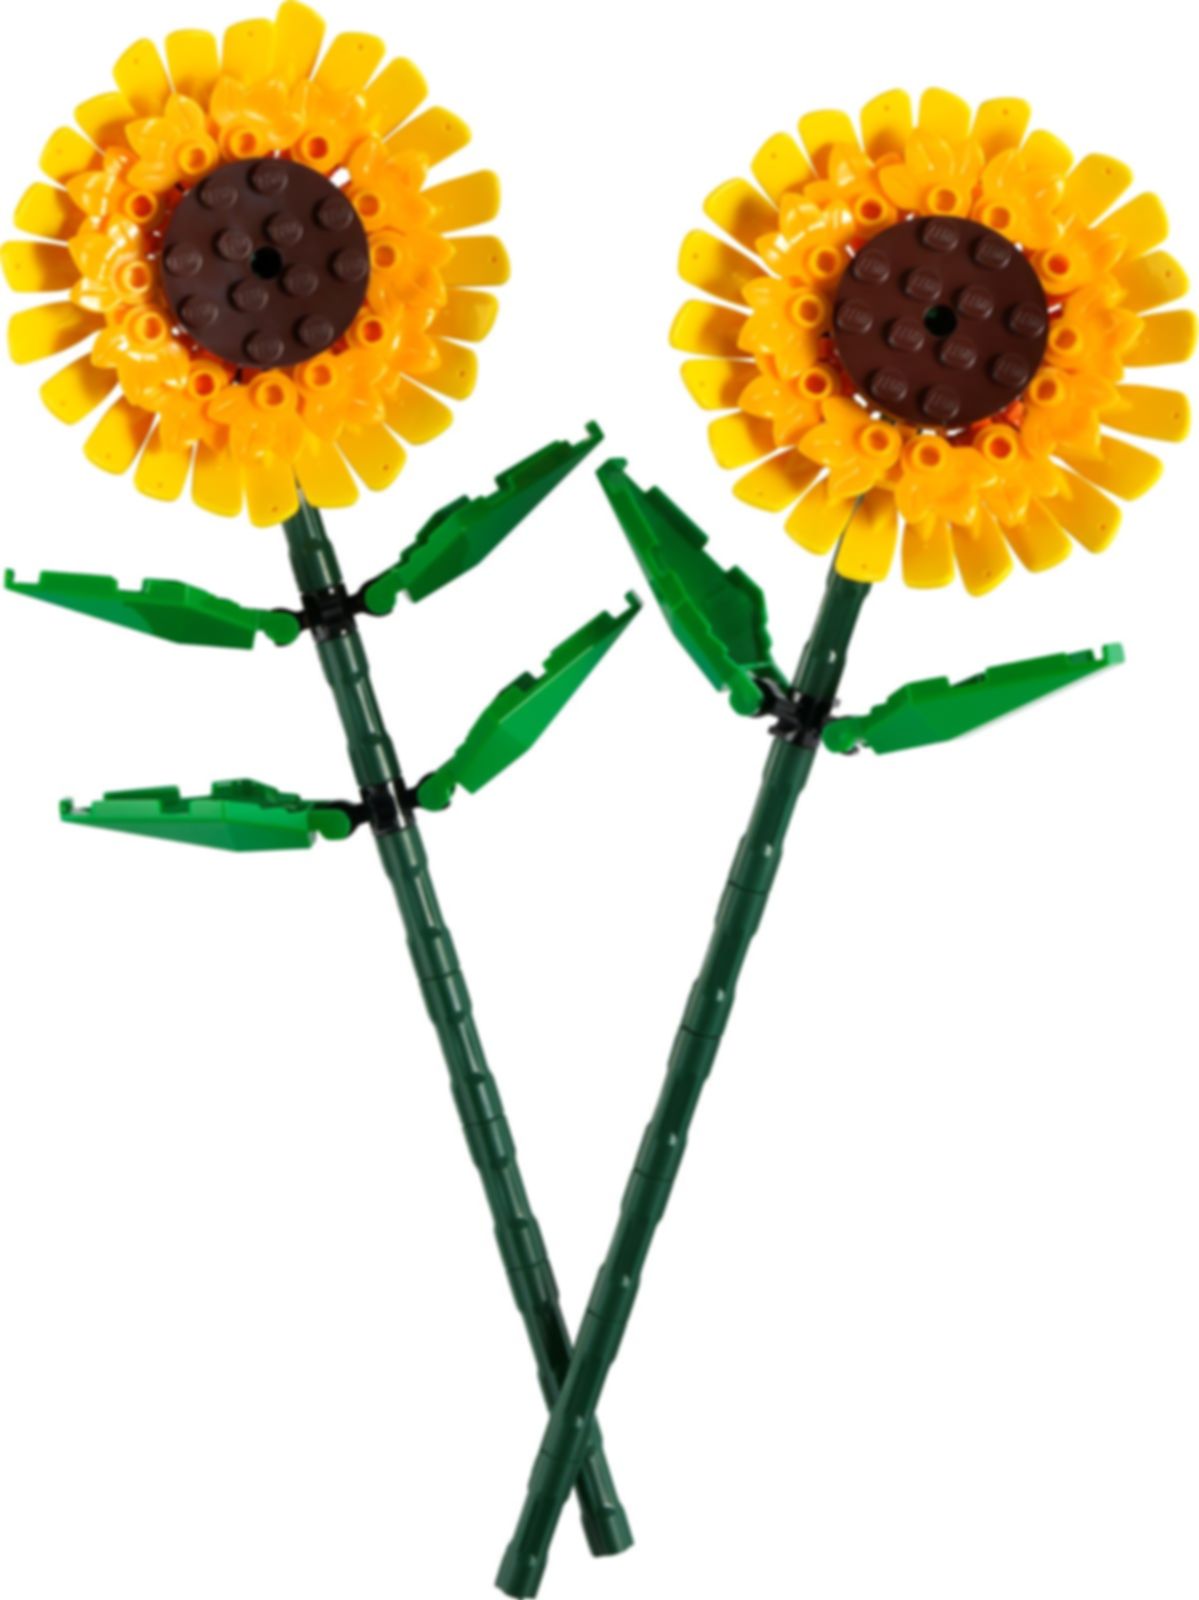 Sonnenblumen komponenten